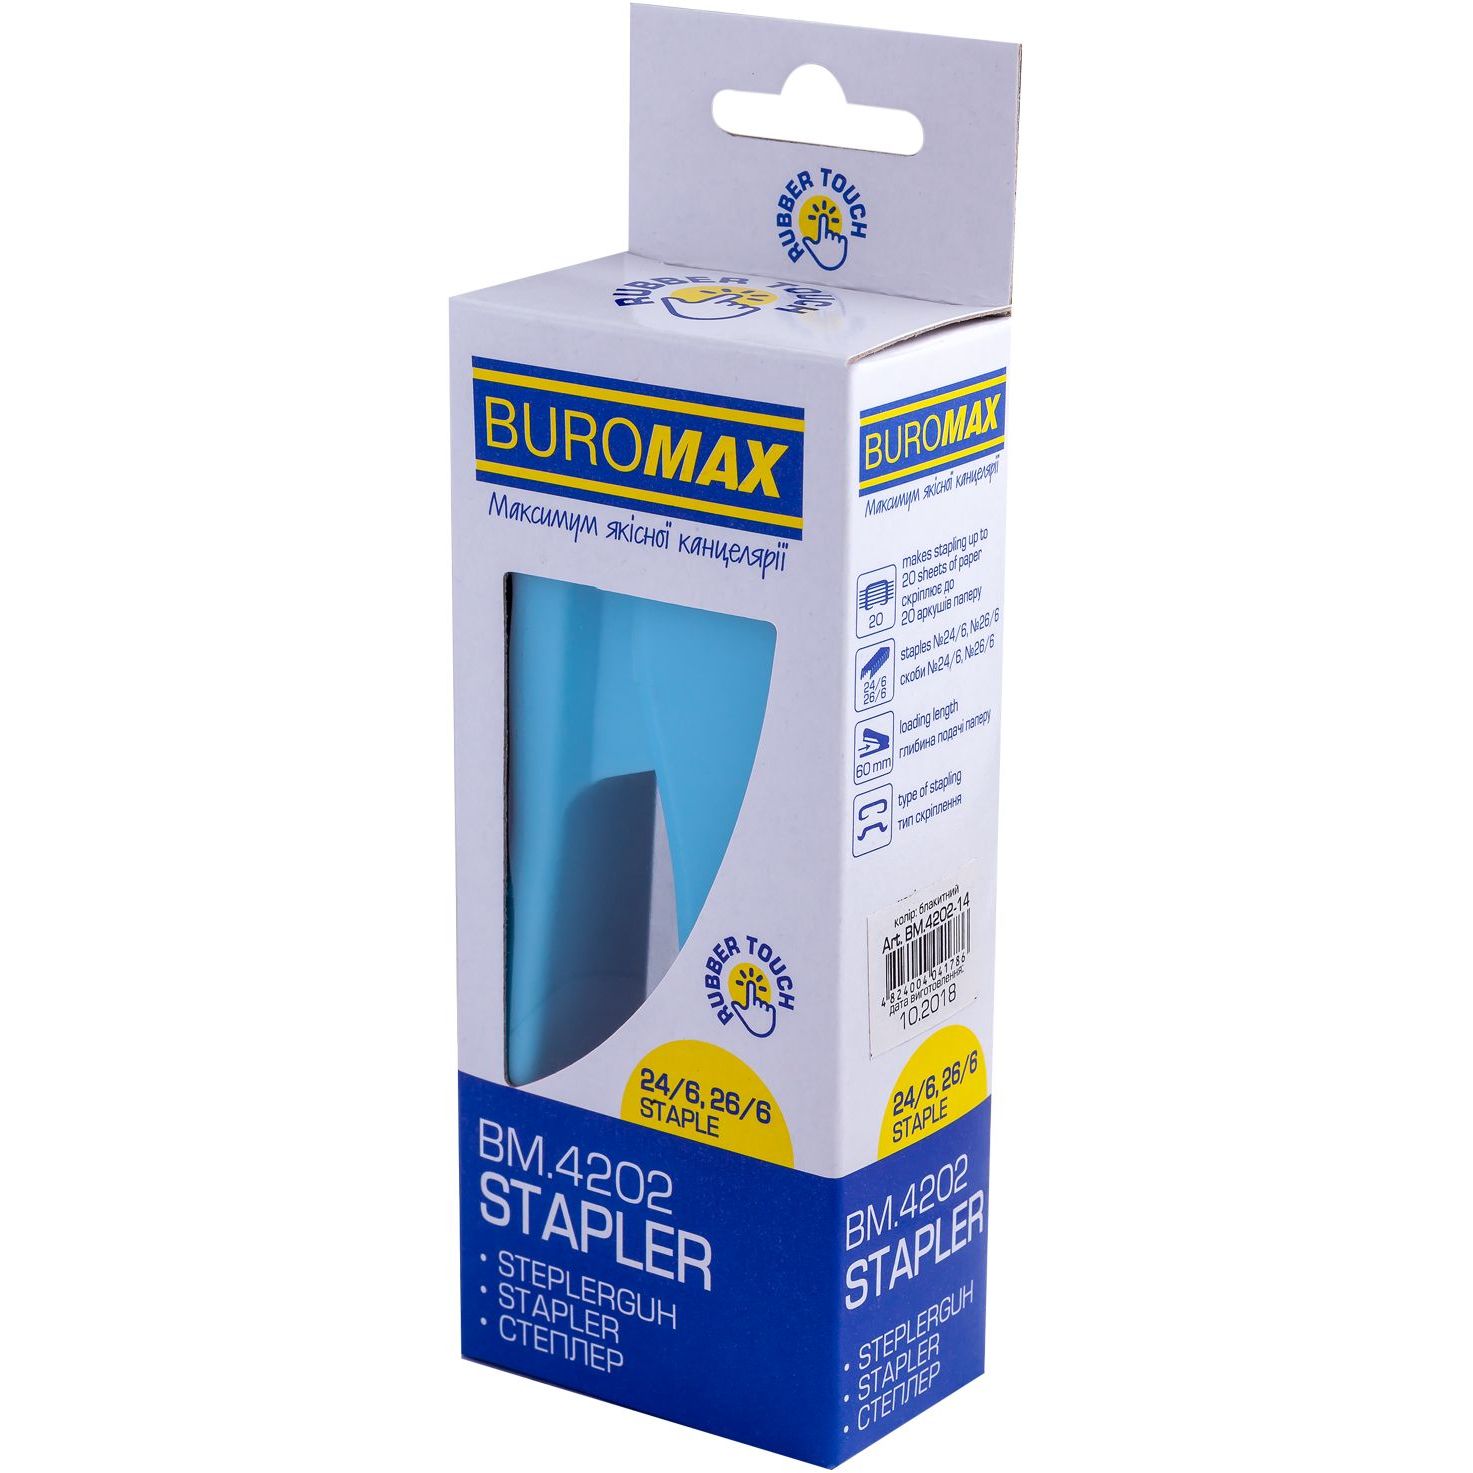 Степлер Buromax Rubber Touch пластиковый №24/6, 26/6, 20 листов голубой (BM.4202-14) - фото 4